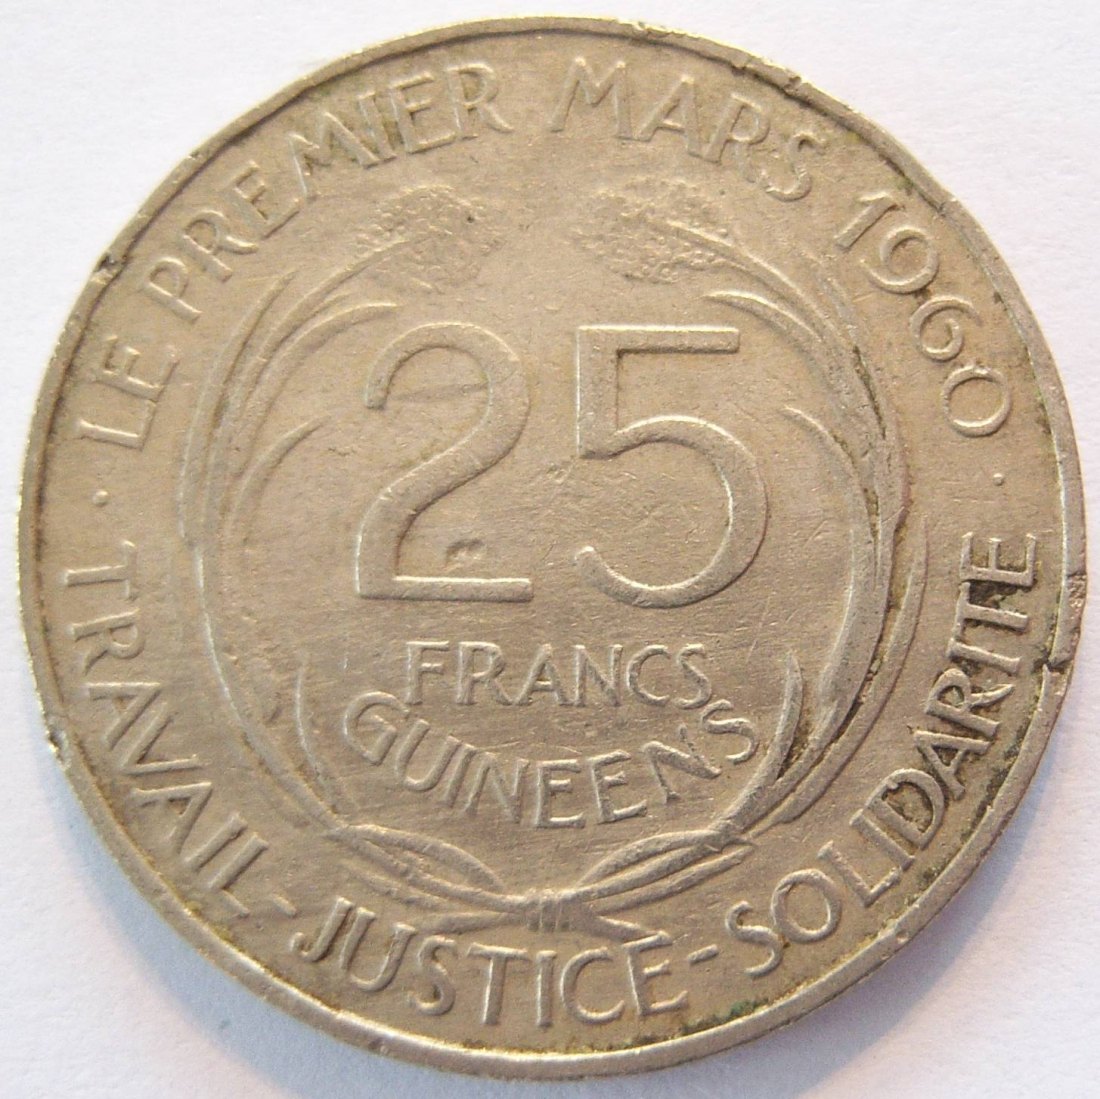  Guinea 25 Francs 1962   